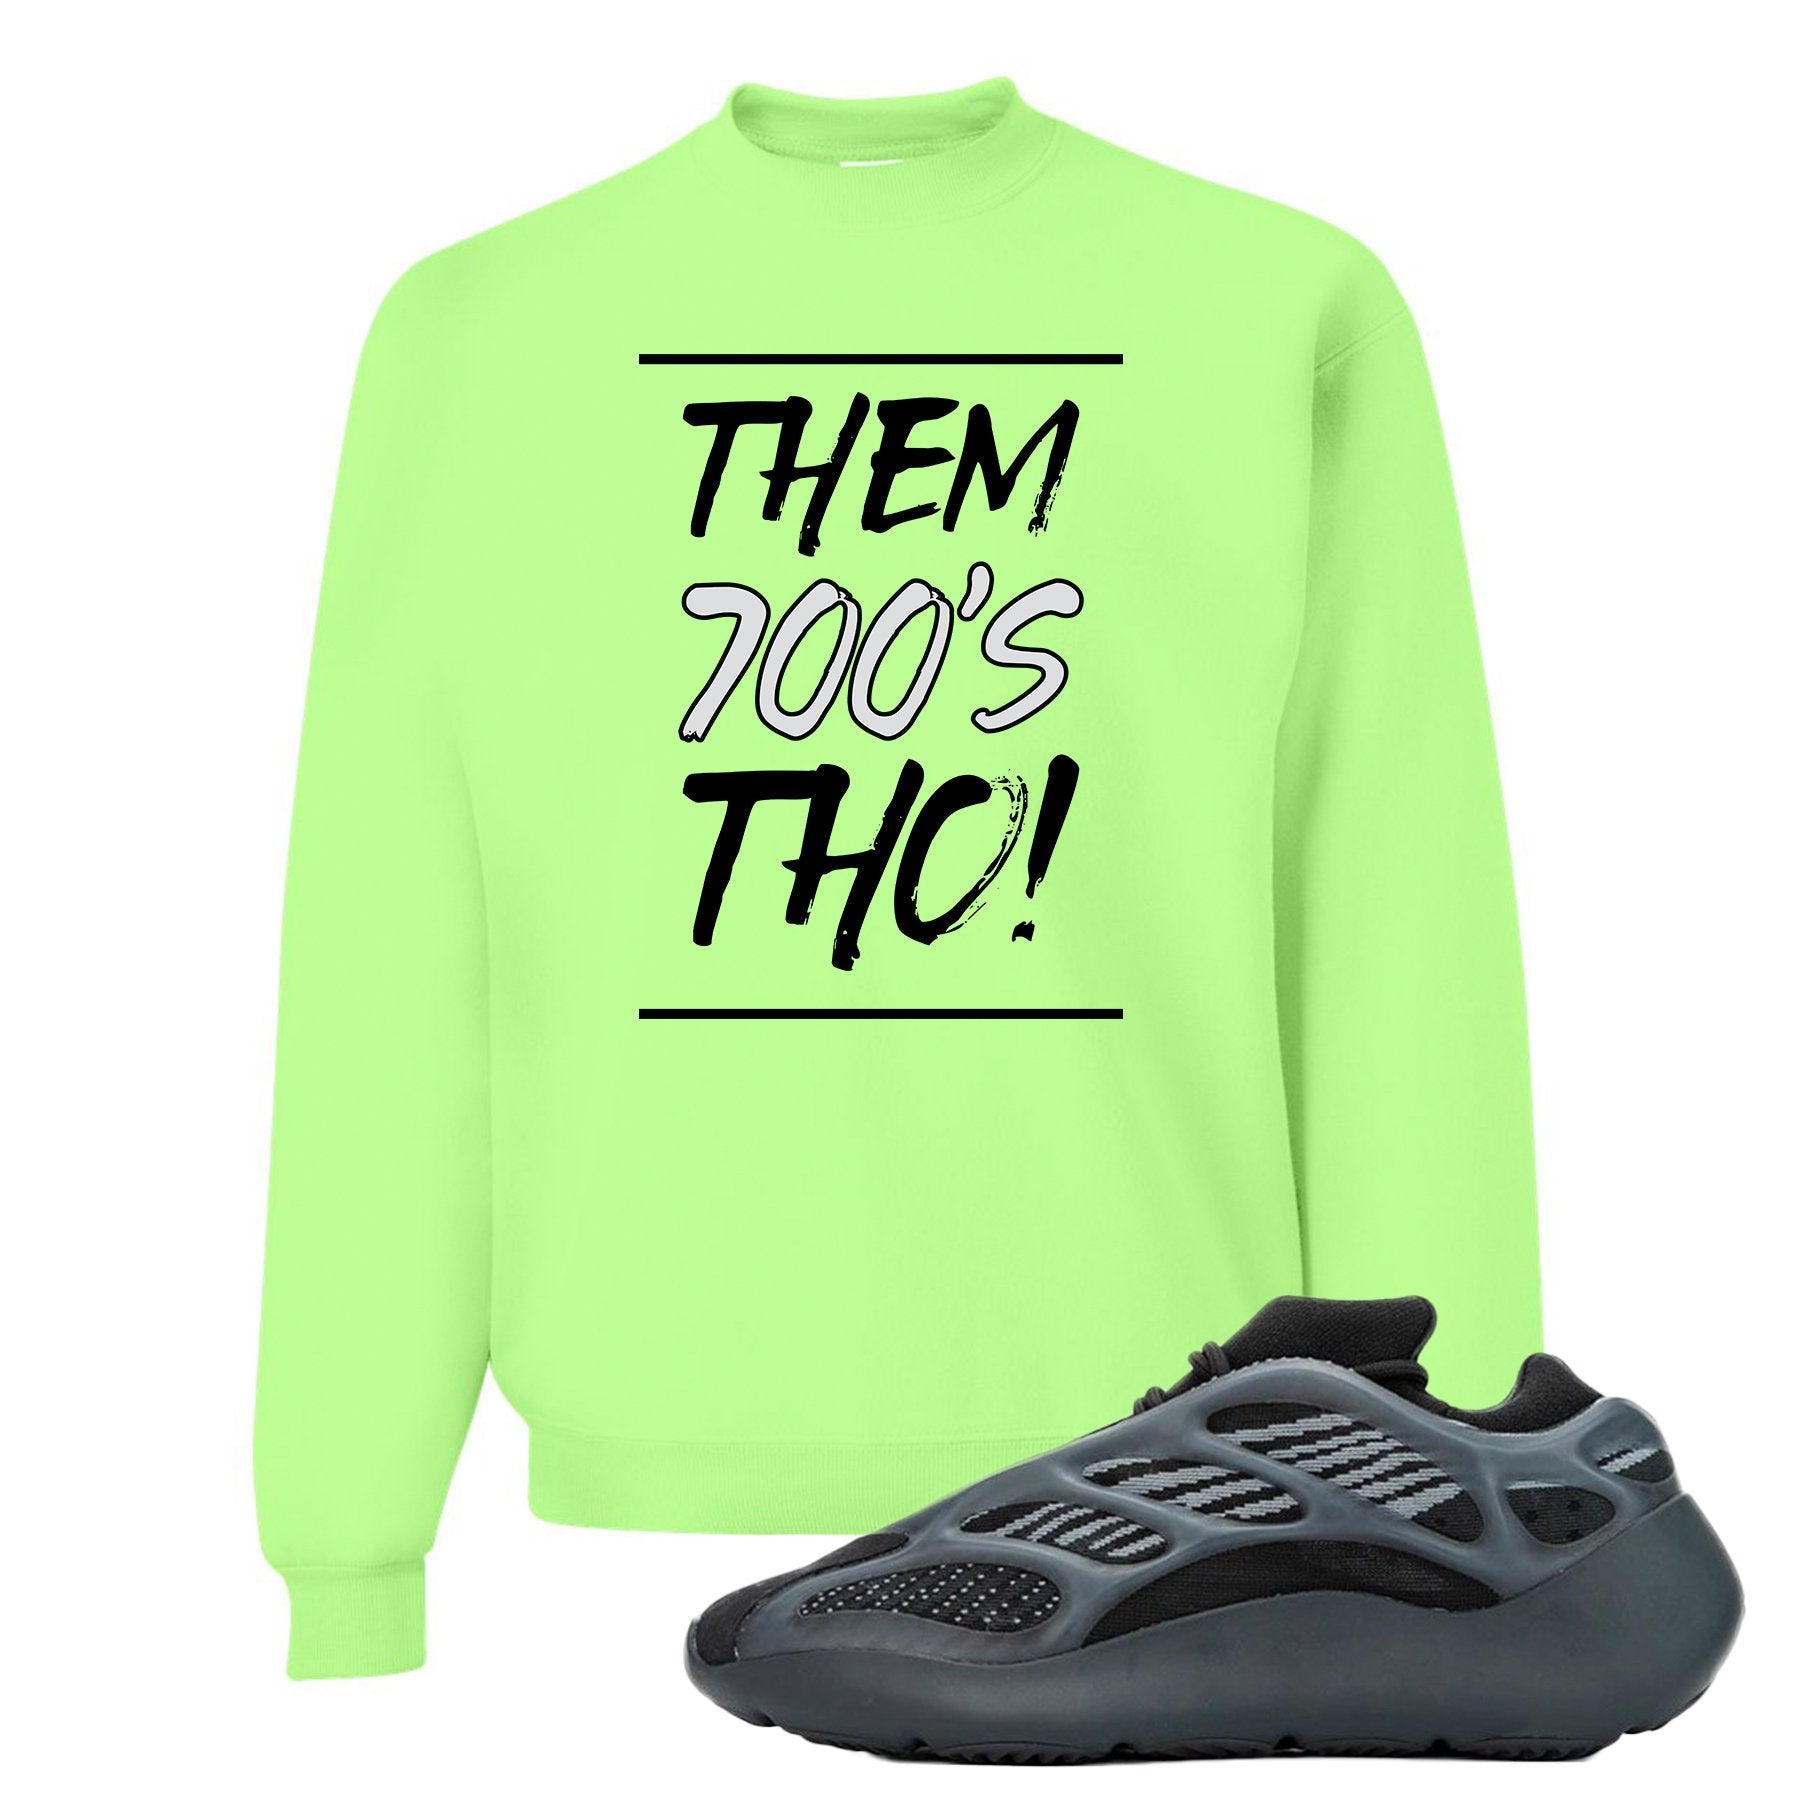 Alvah v3 700s Crewneck Sweatshirt | Them 700's Tho!, Neon Green